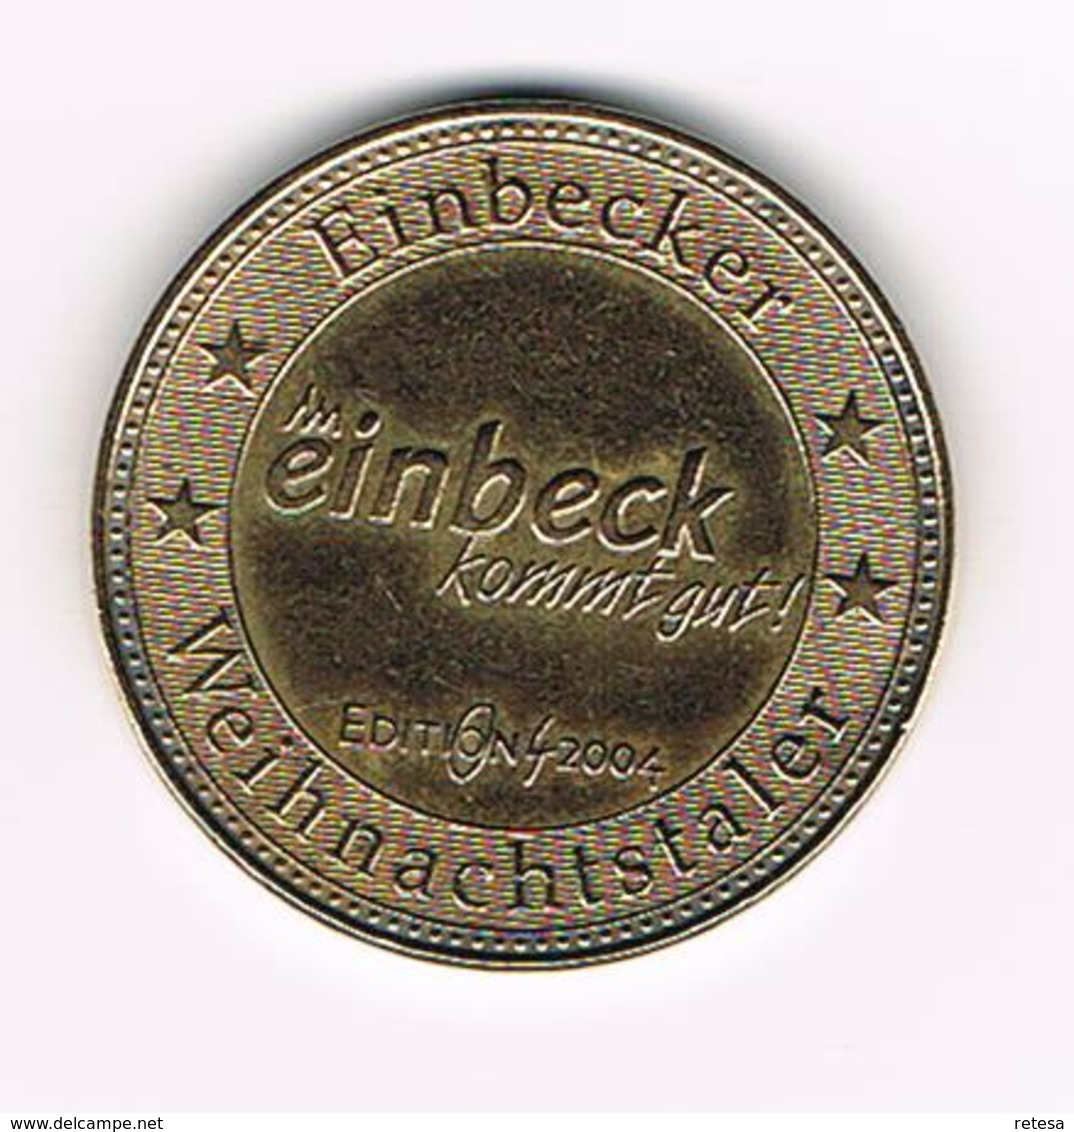 &  PENNING  EINBECKER  WEIHNACHTSTALER  EICKESCHES HAUS 2004 - Pièces écrasées (Elongated Coins)